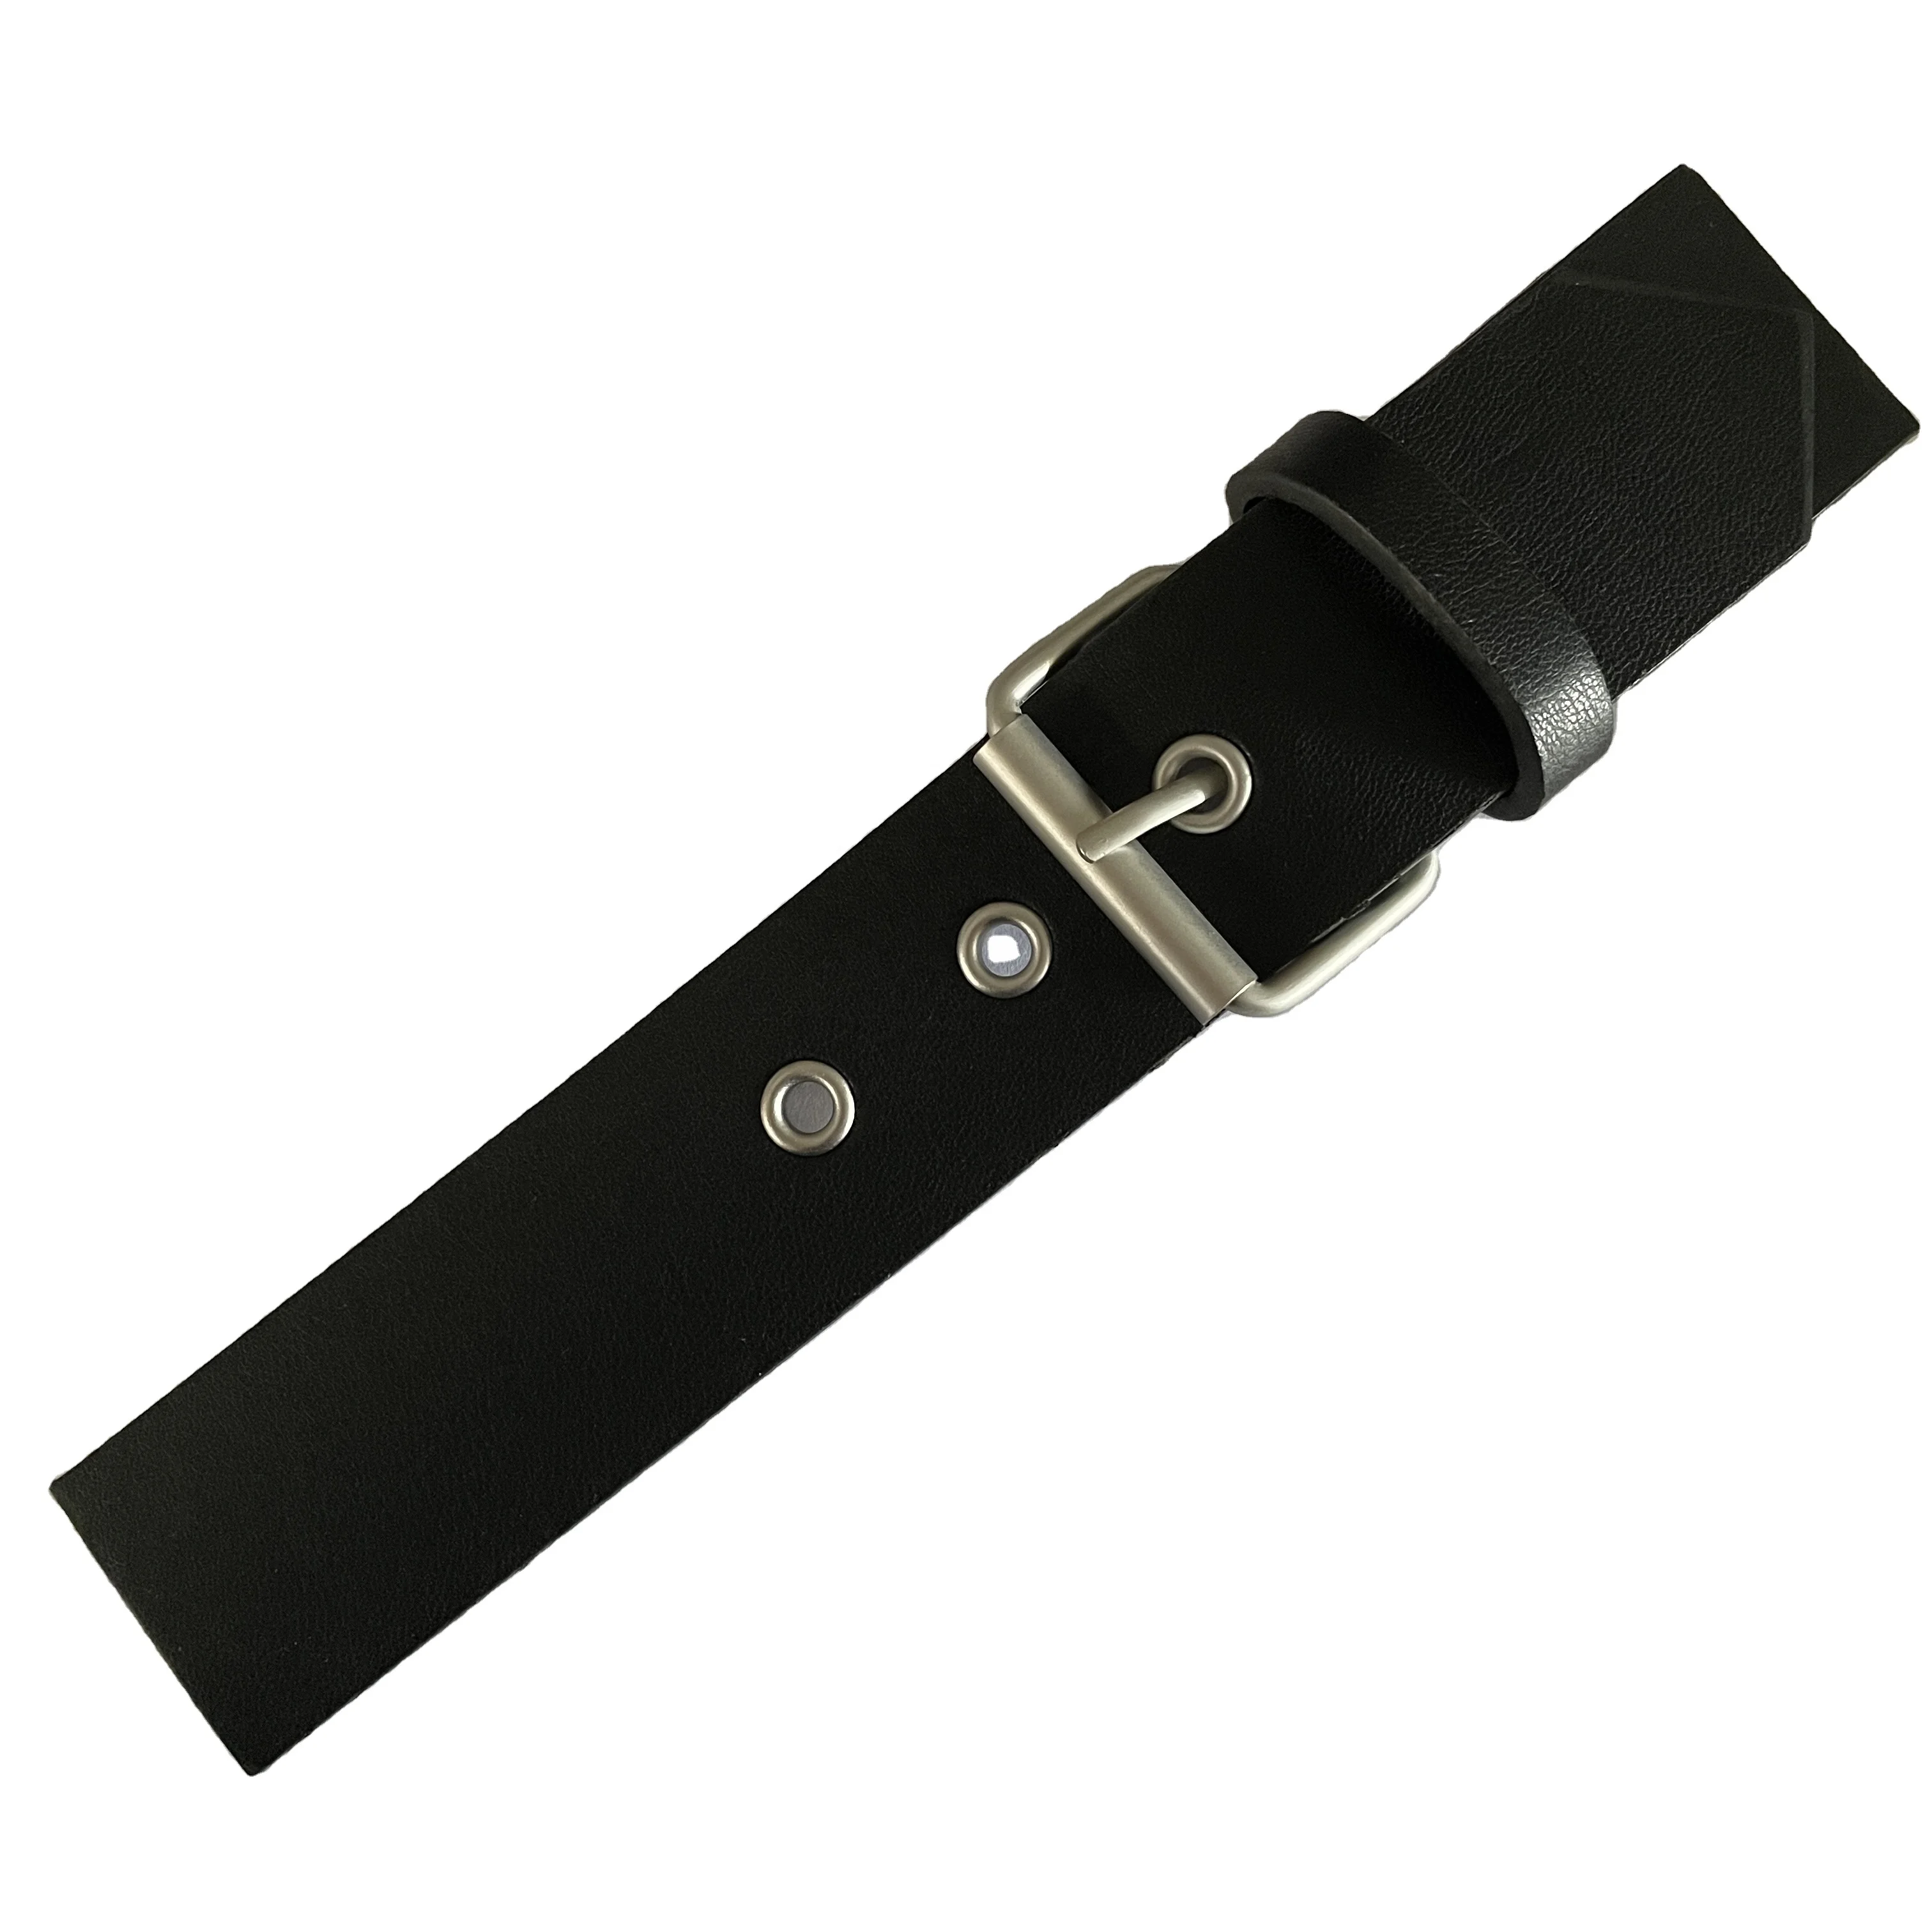 New type custom belt buckles custom belt buckles fashion leather belt